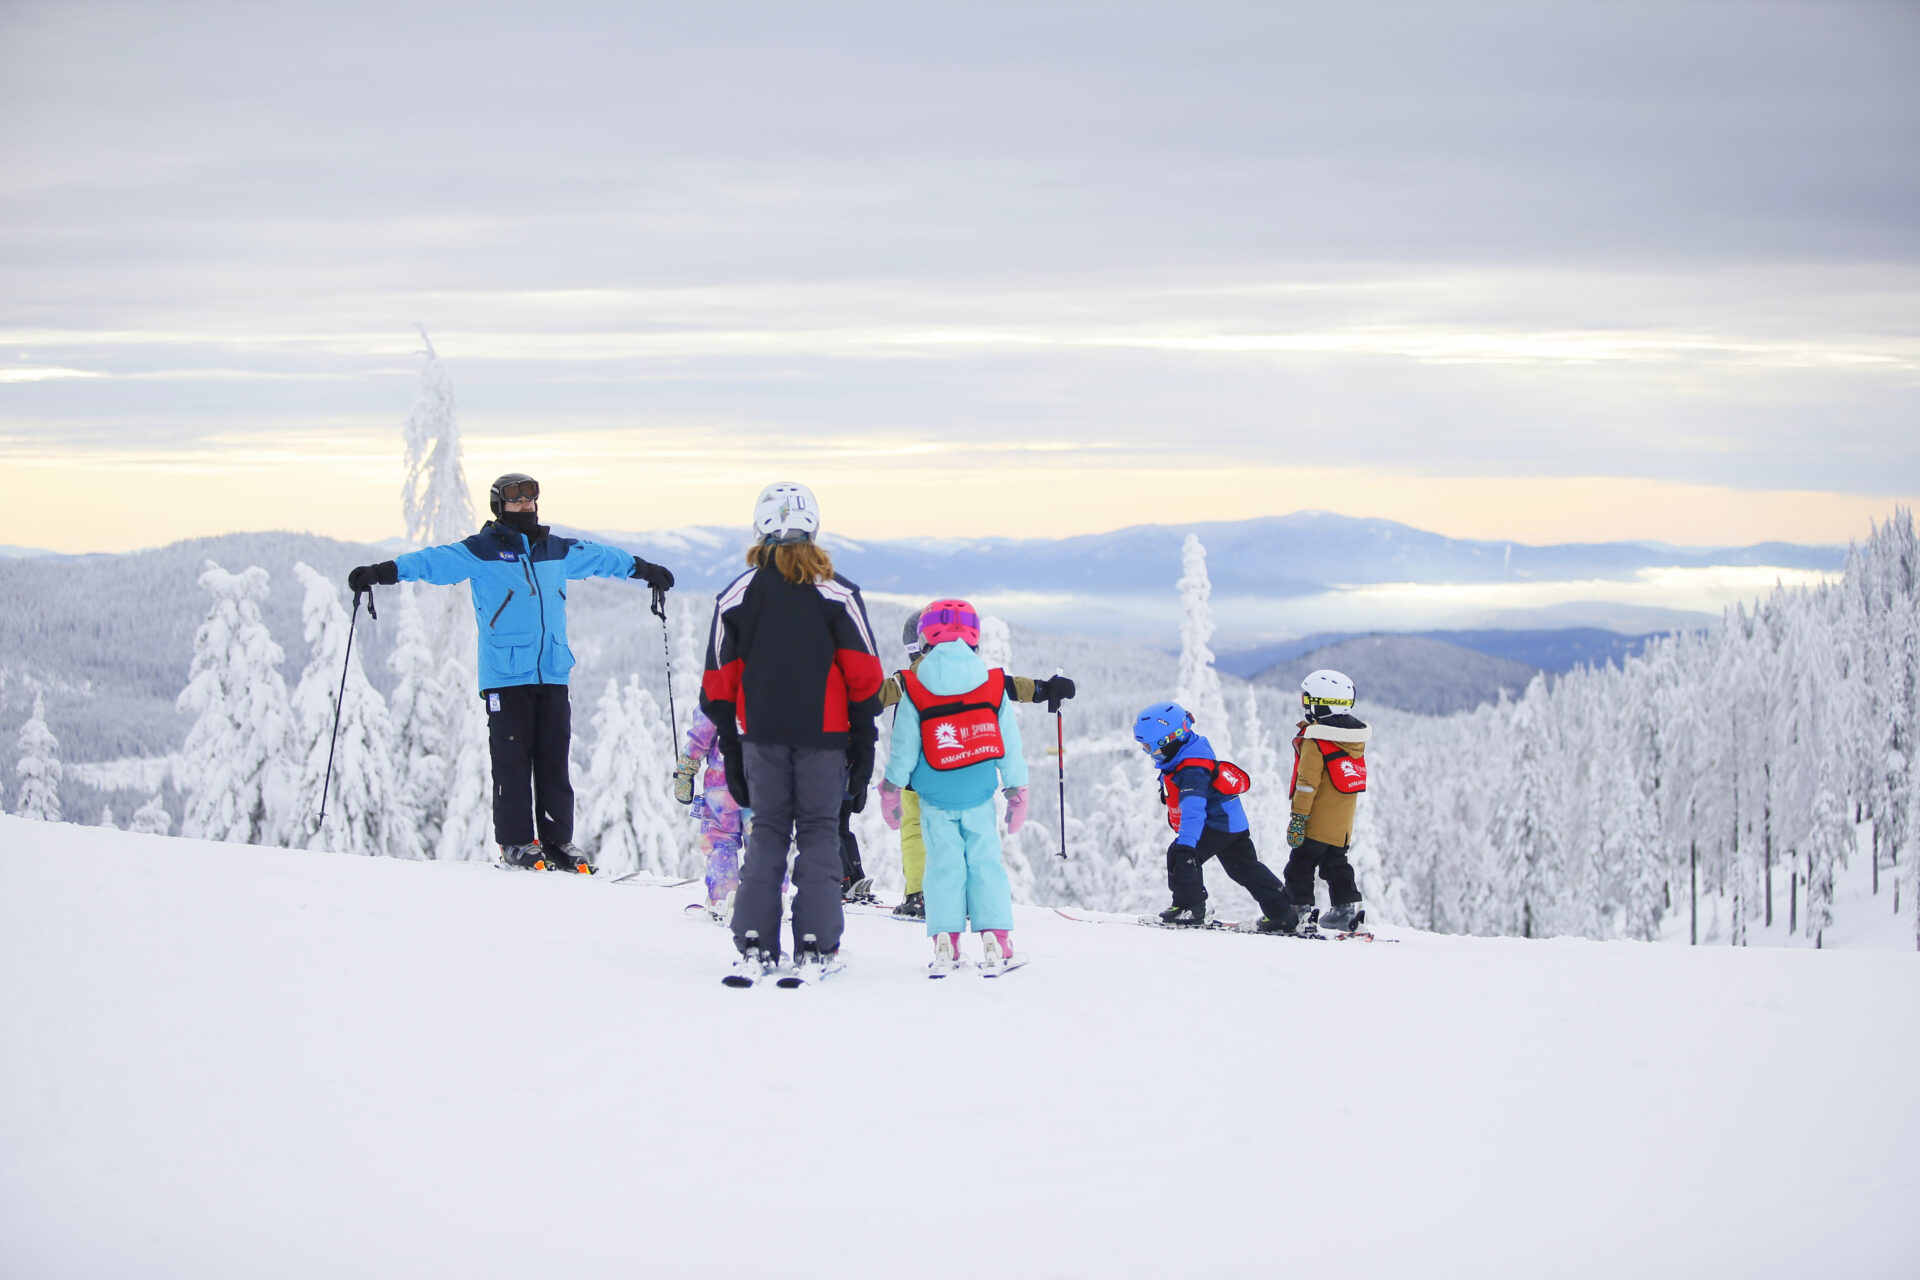 Ski lessons at Mt Spokane